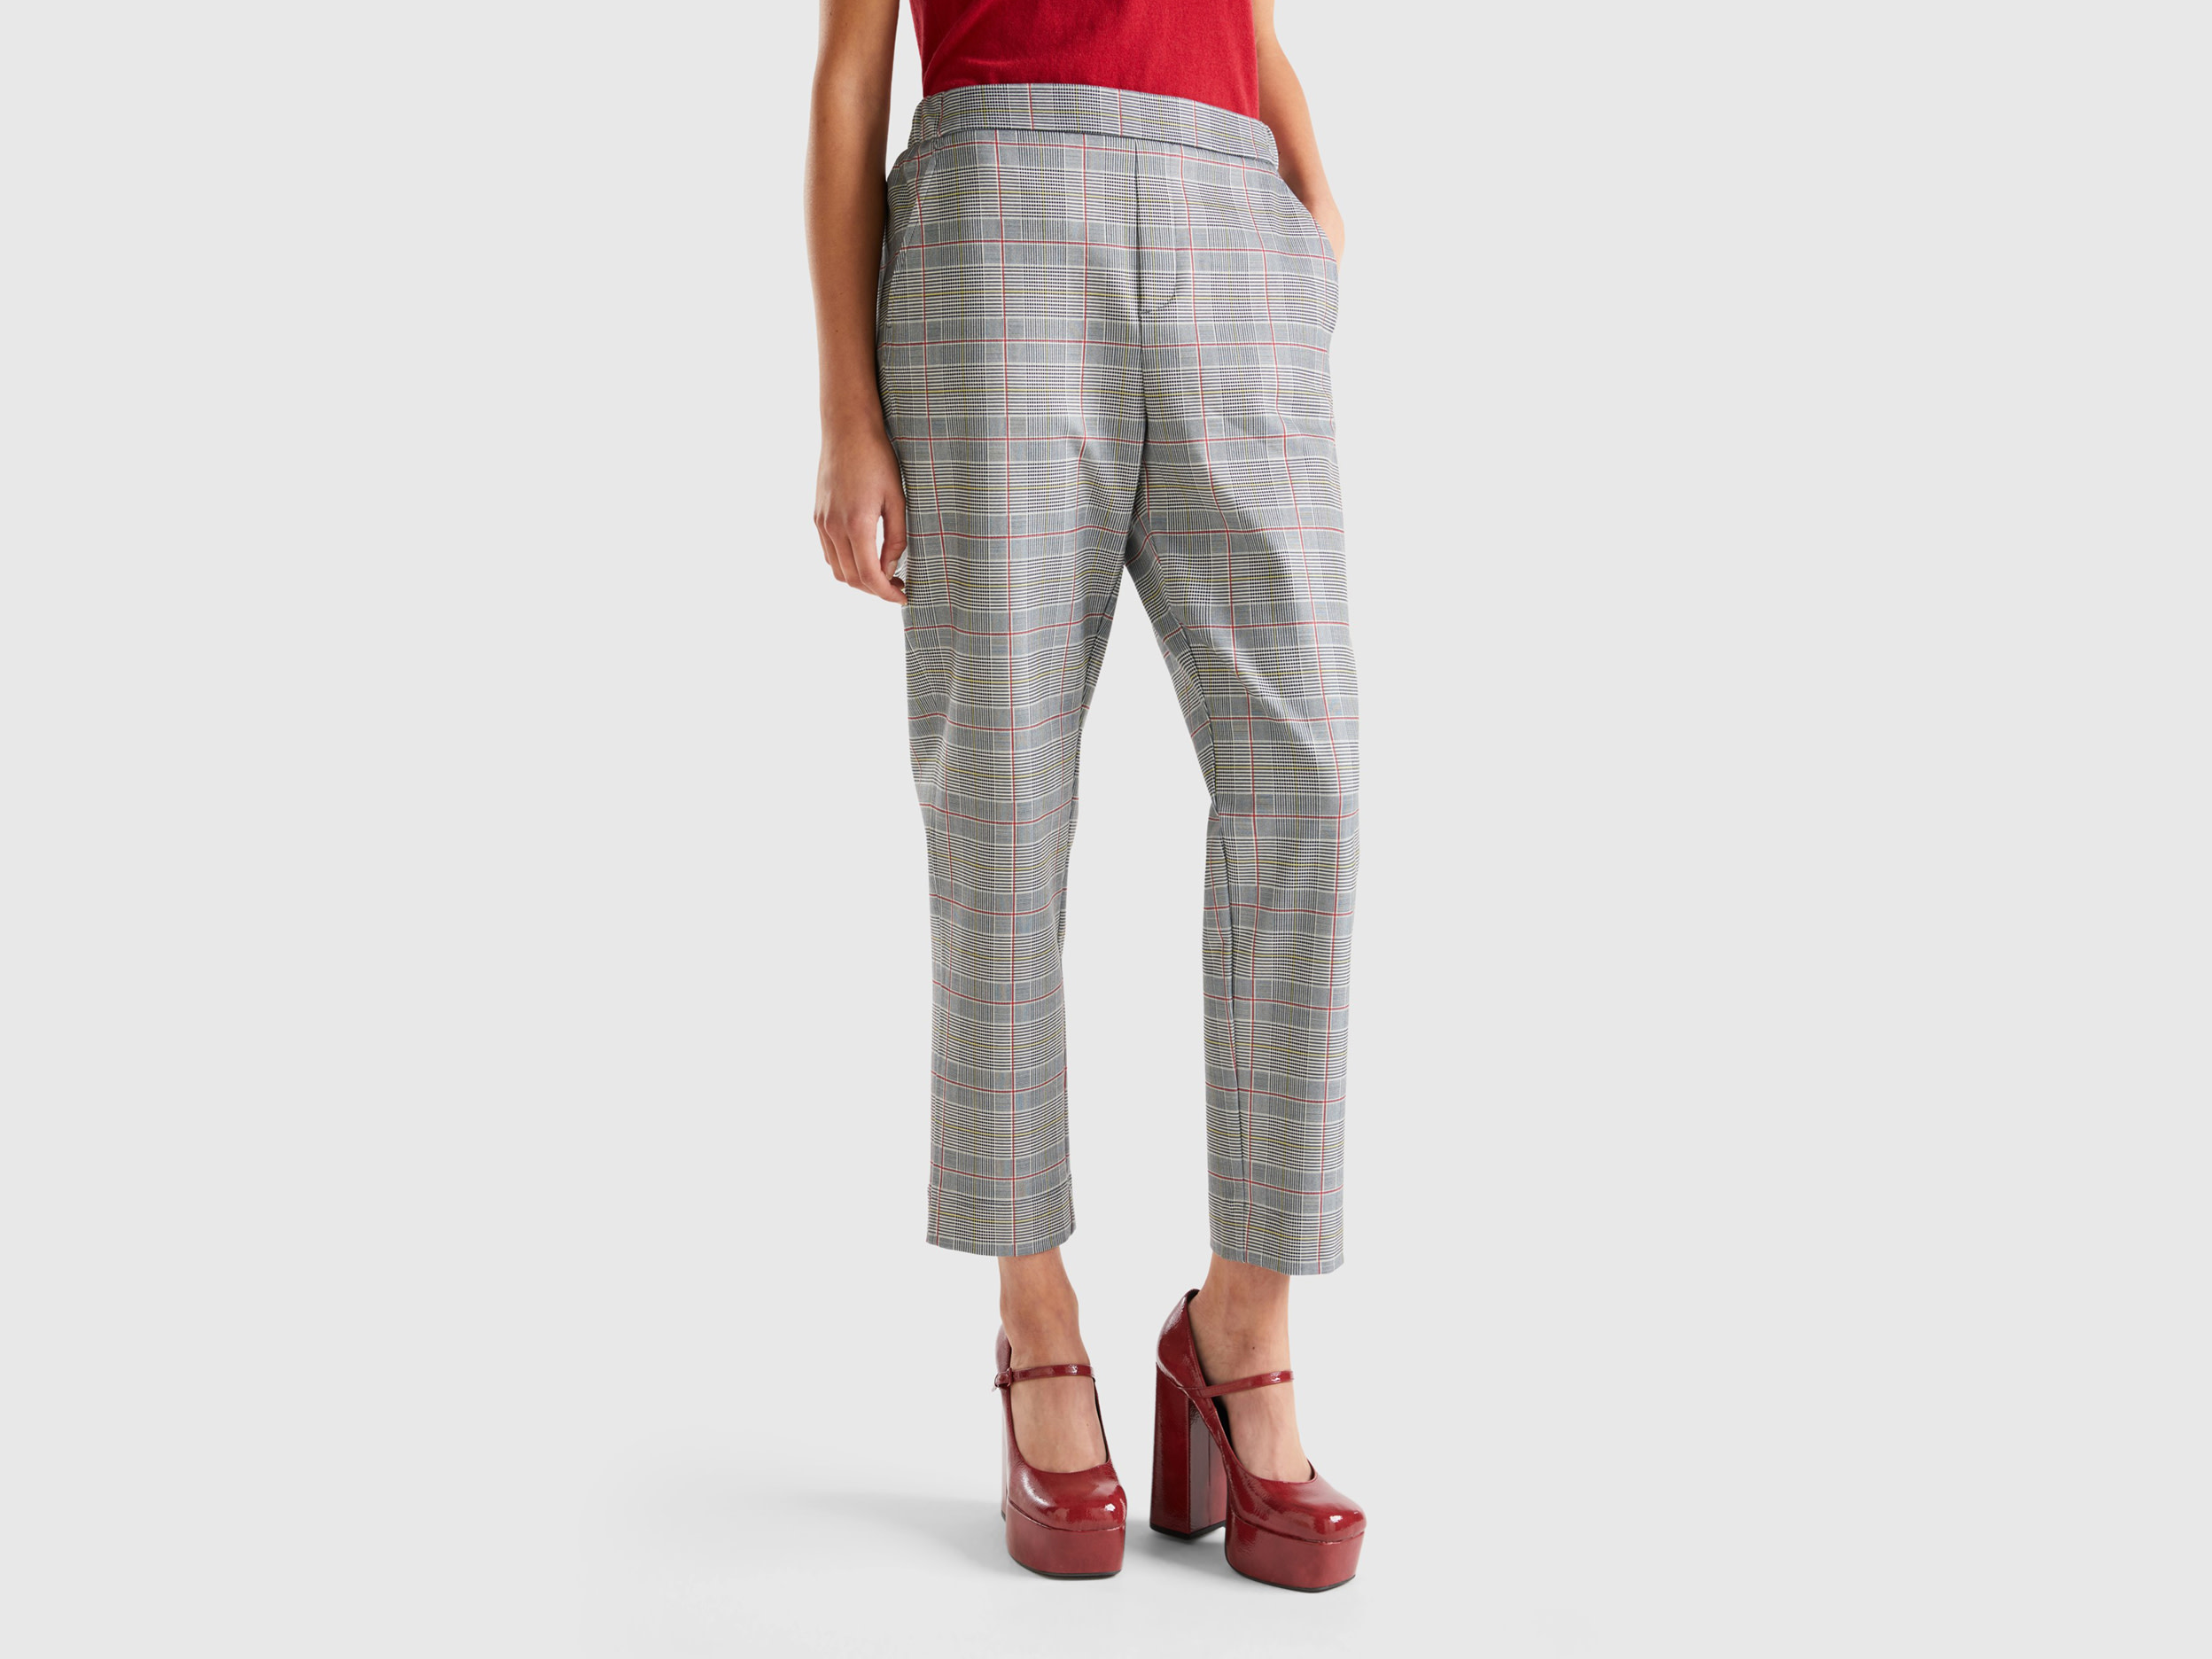 Benetton, Patterned Pants With Elastic Waist, size XS, Light Gray, Women